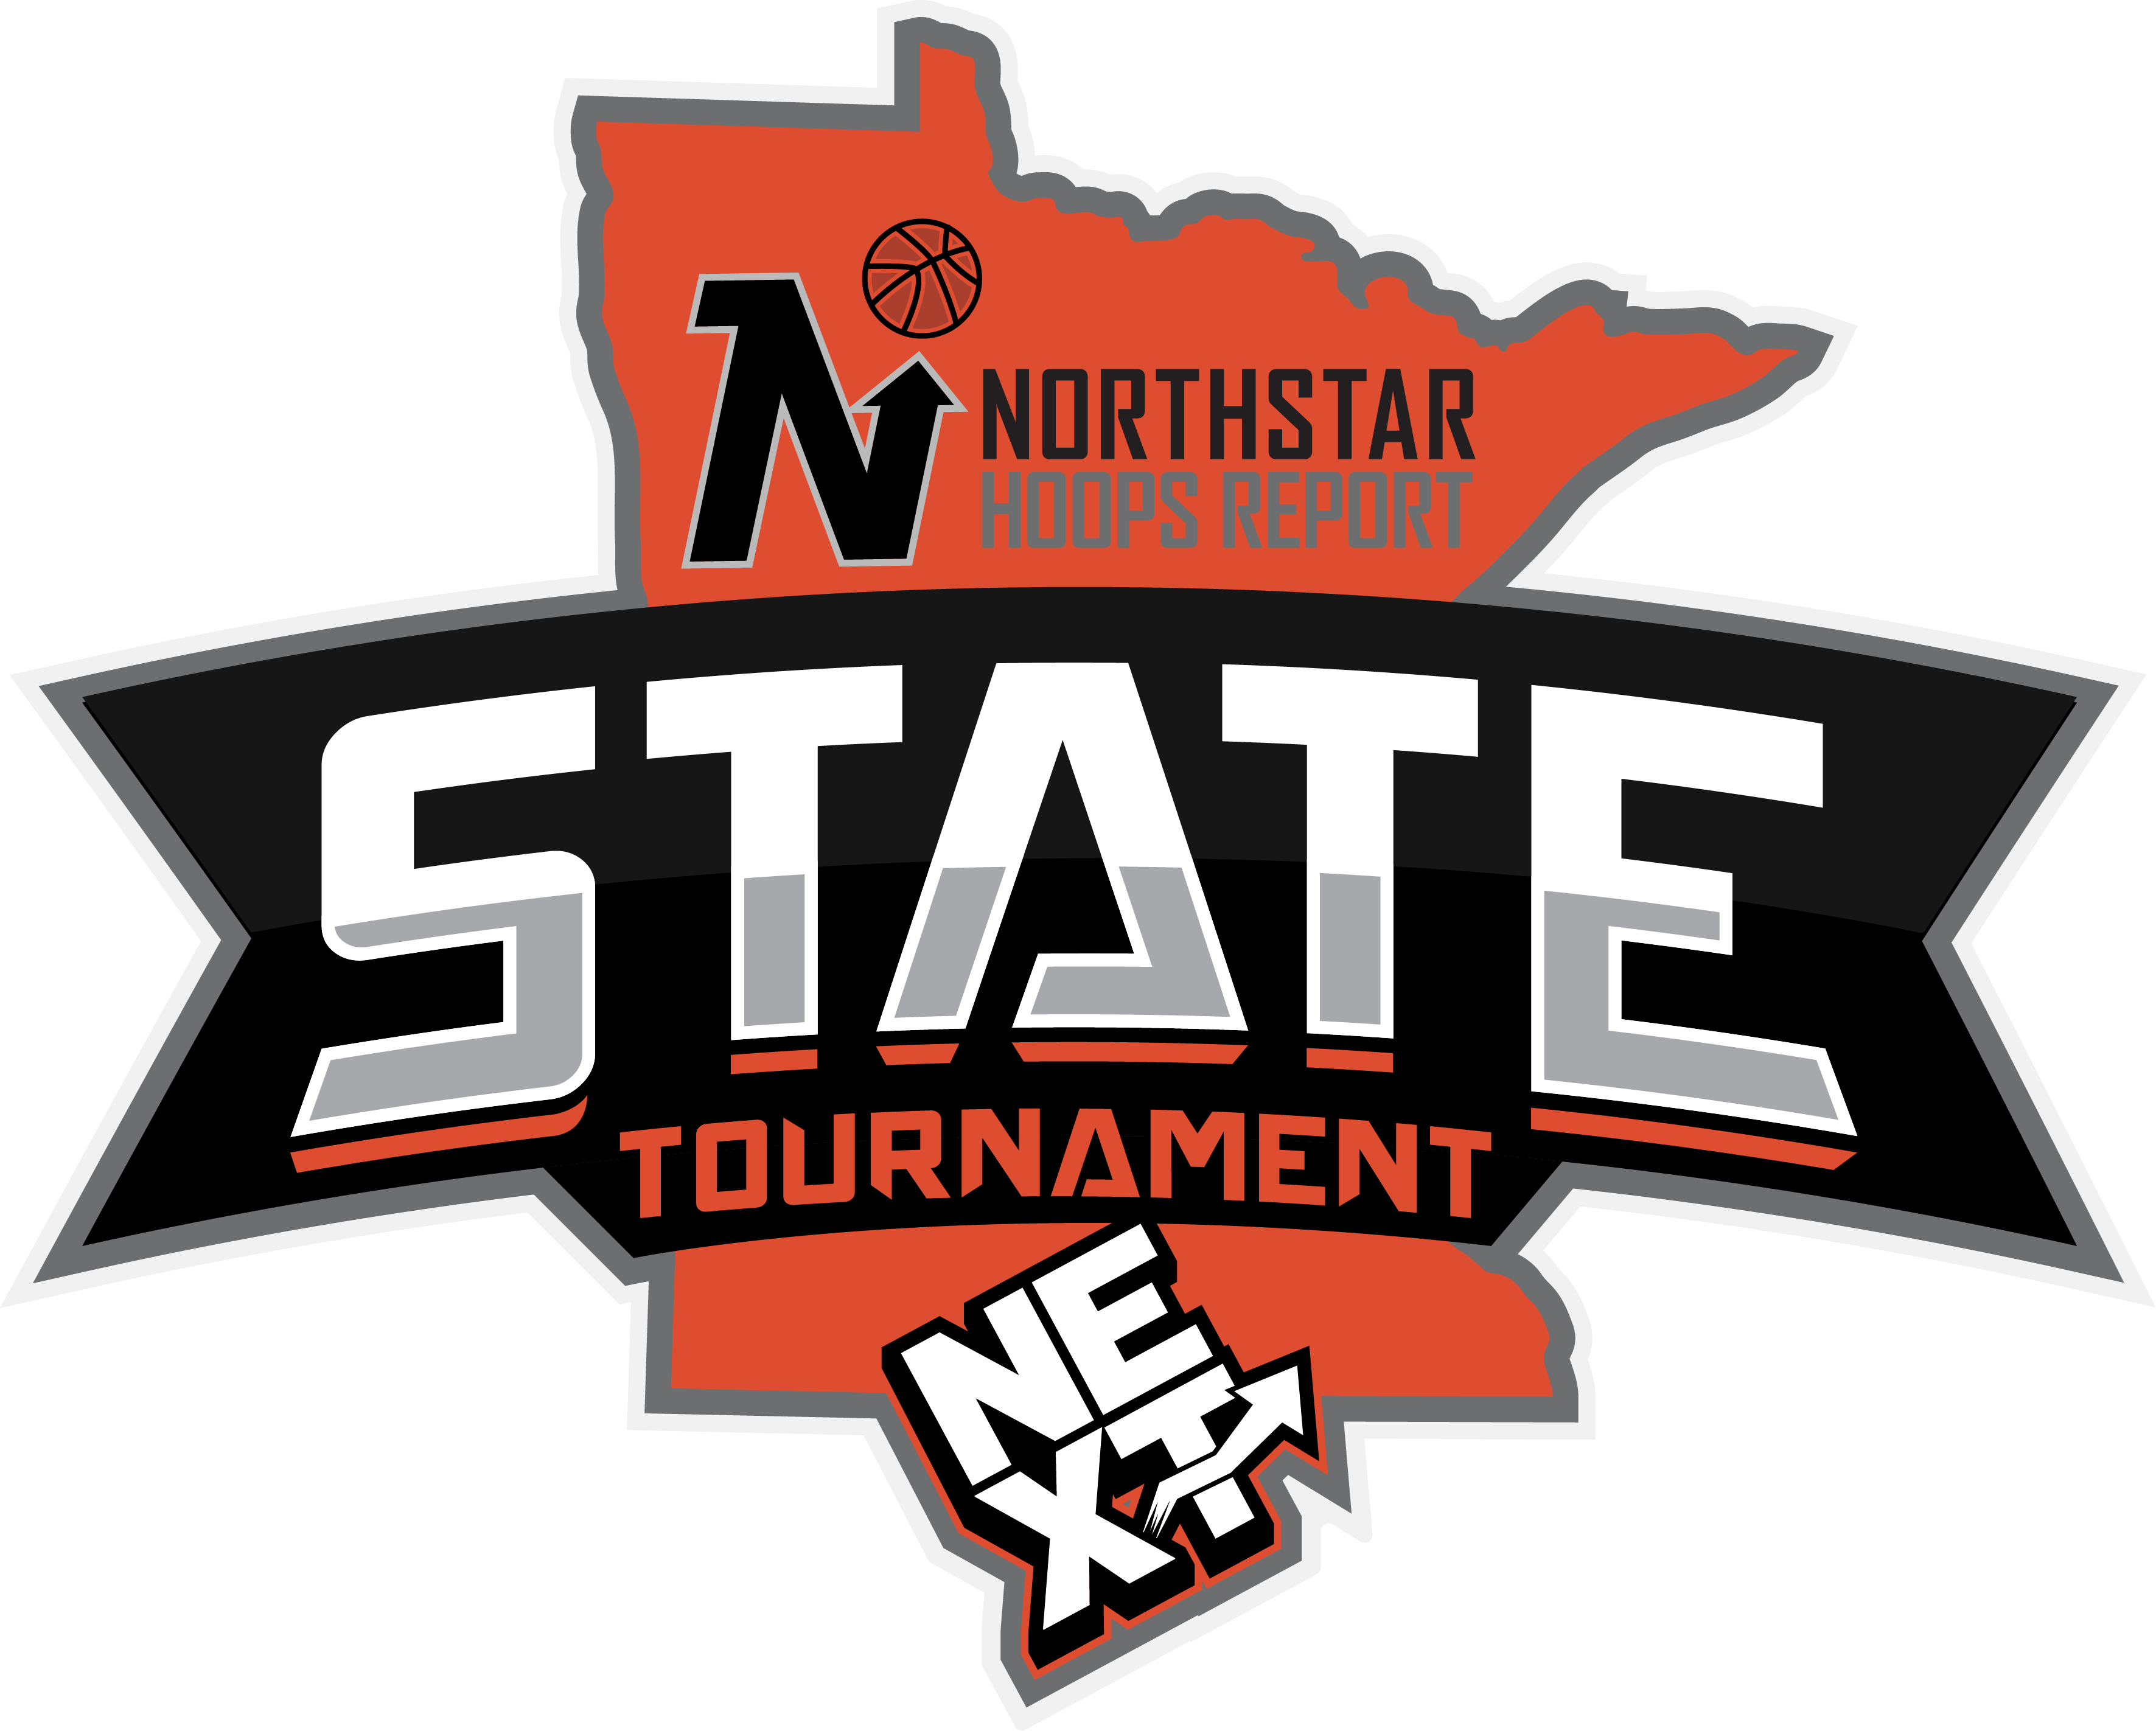 NHR State Tournament